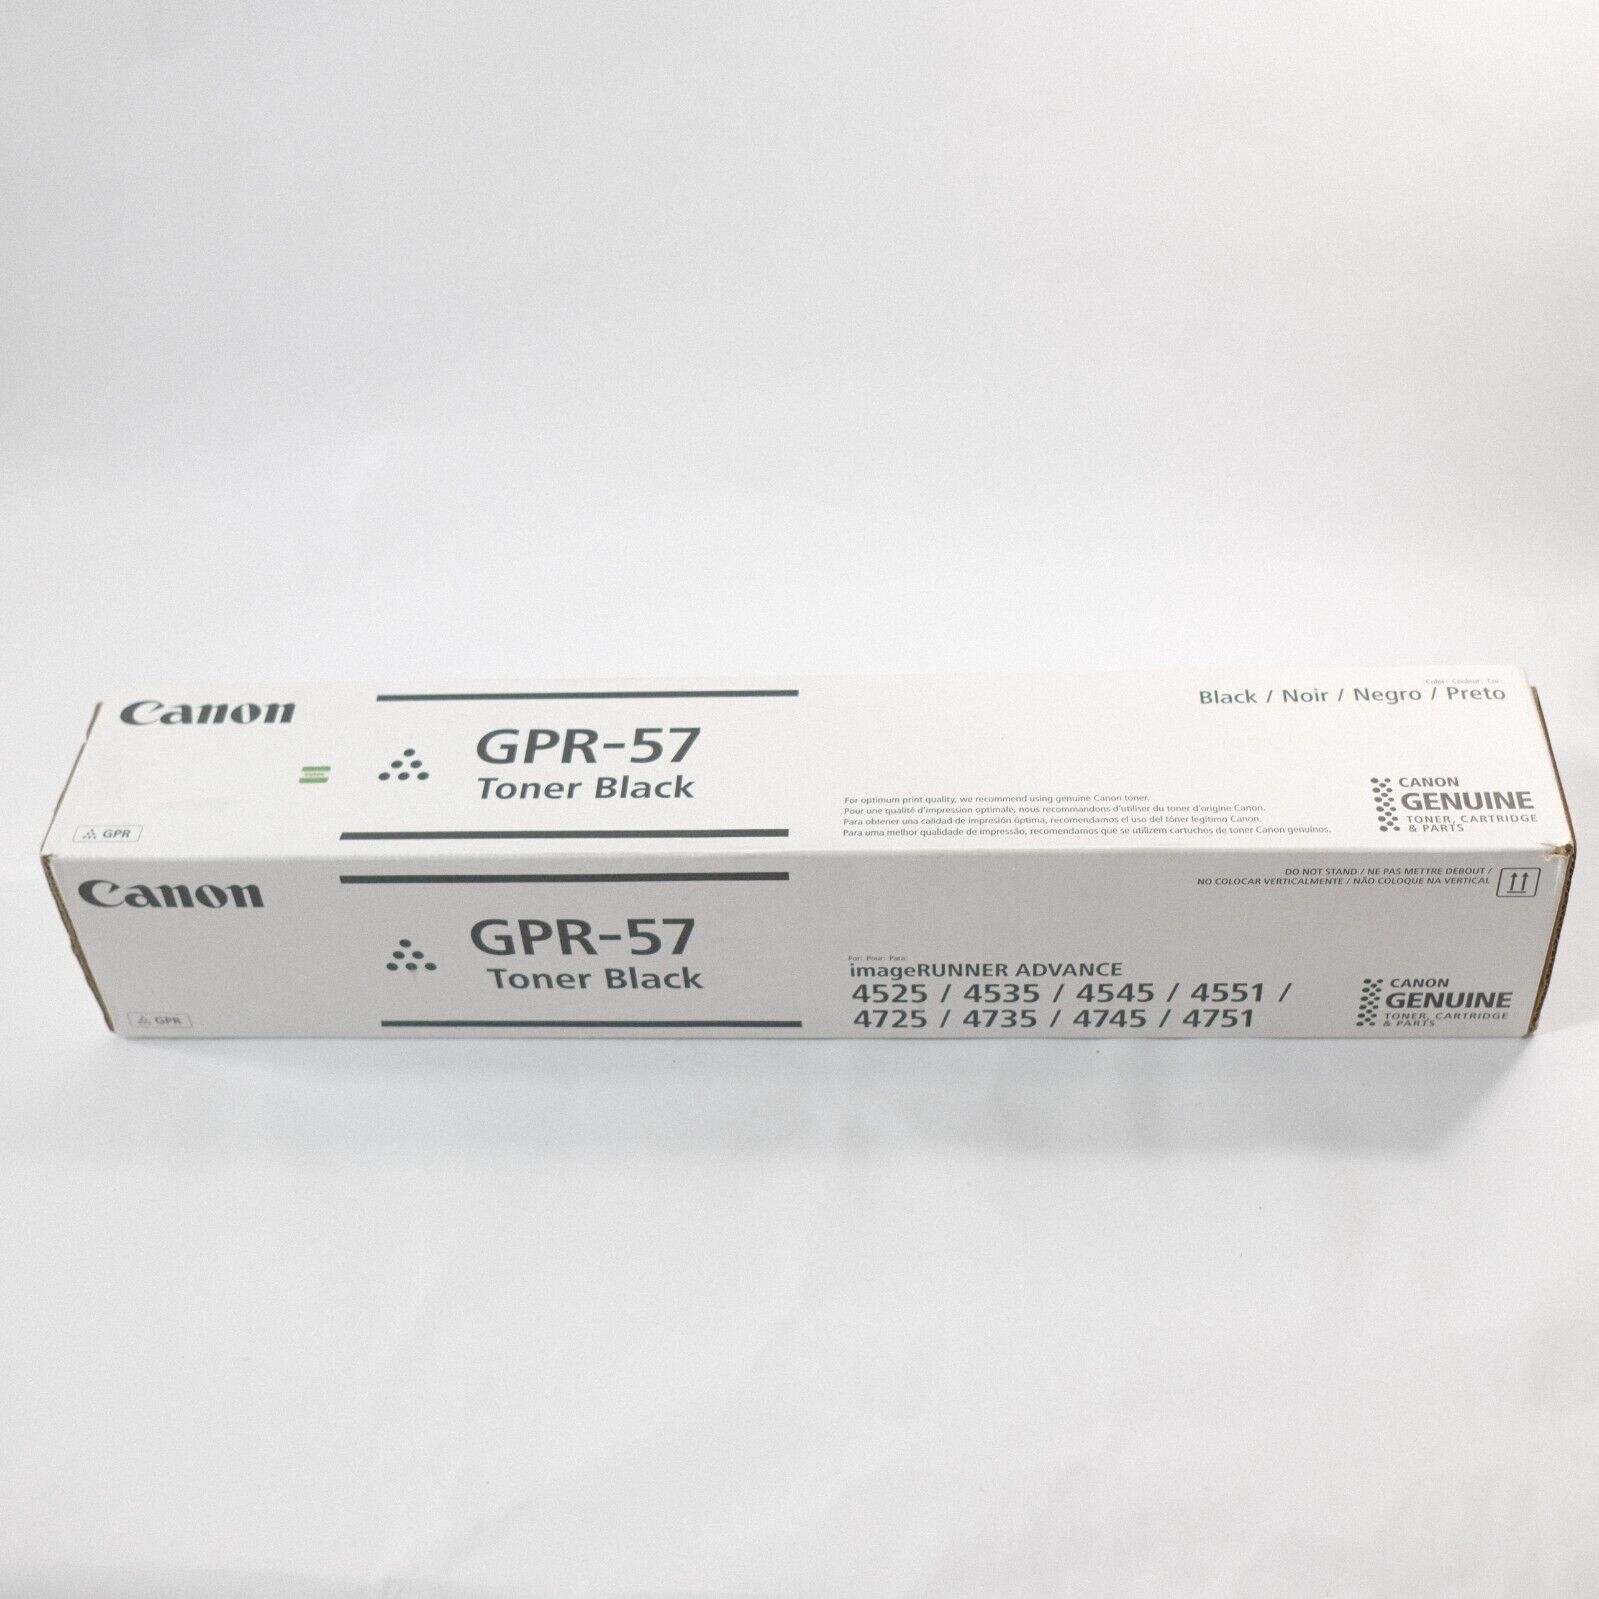 Canon Genuine Black Toner Cartridge GPR-57 NEW SEALED